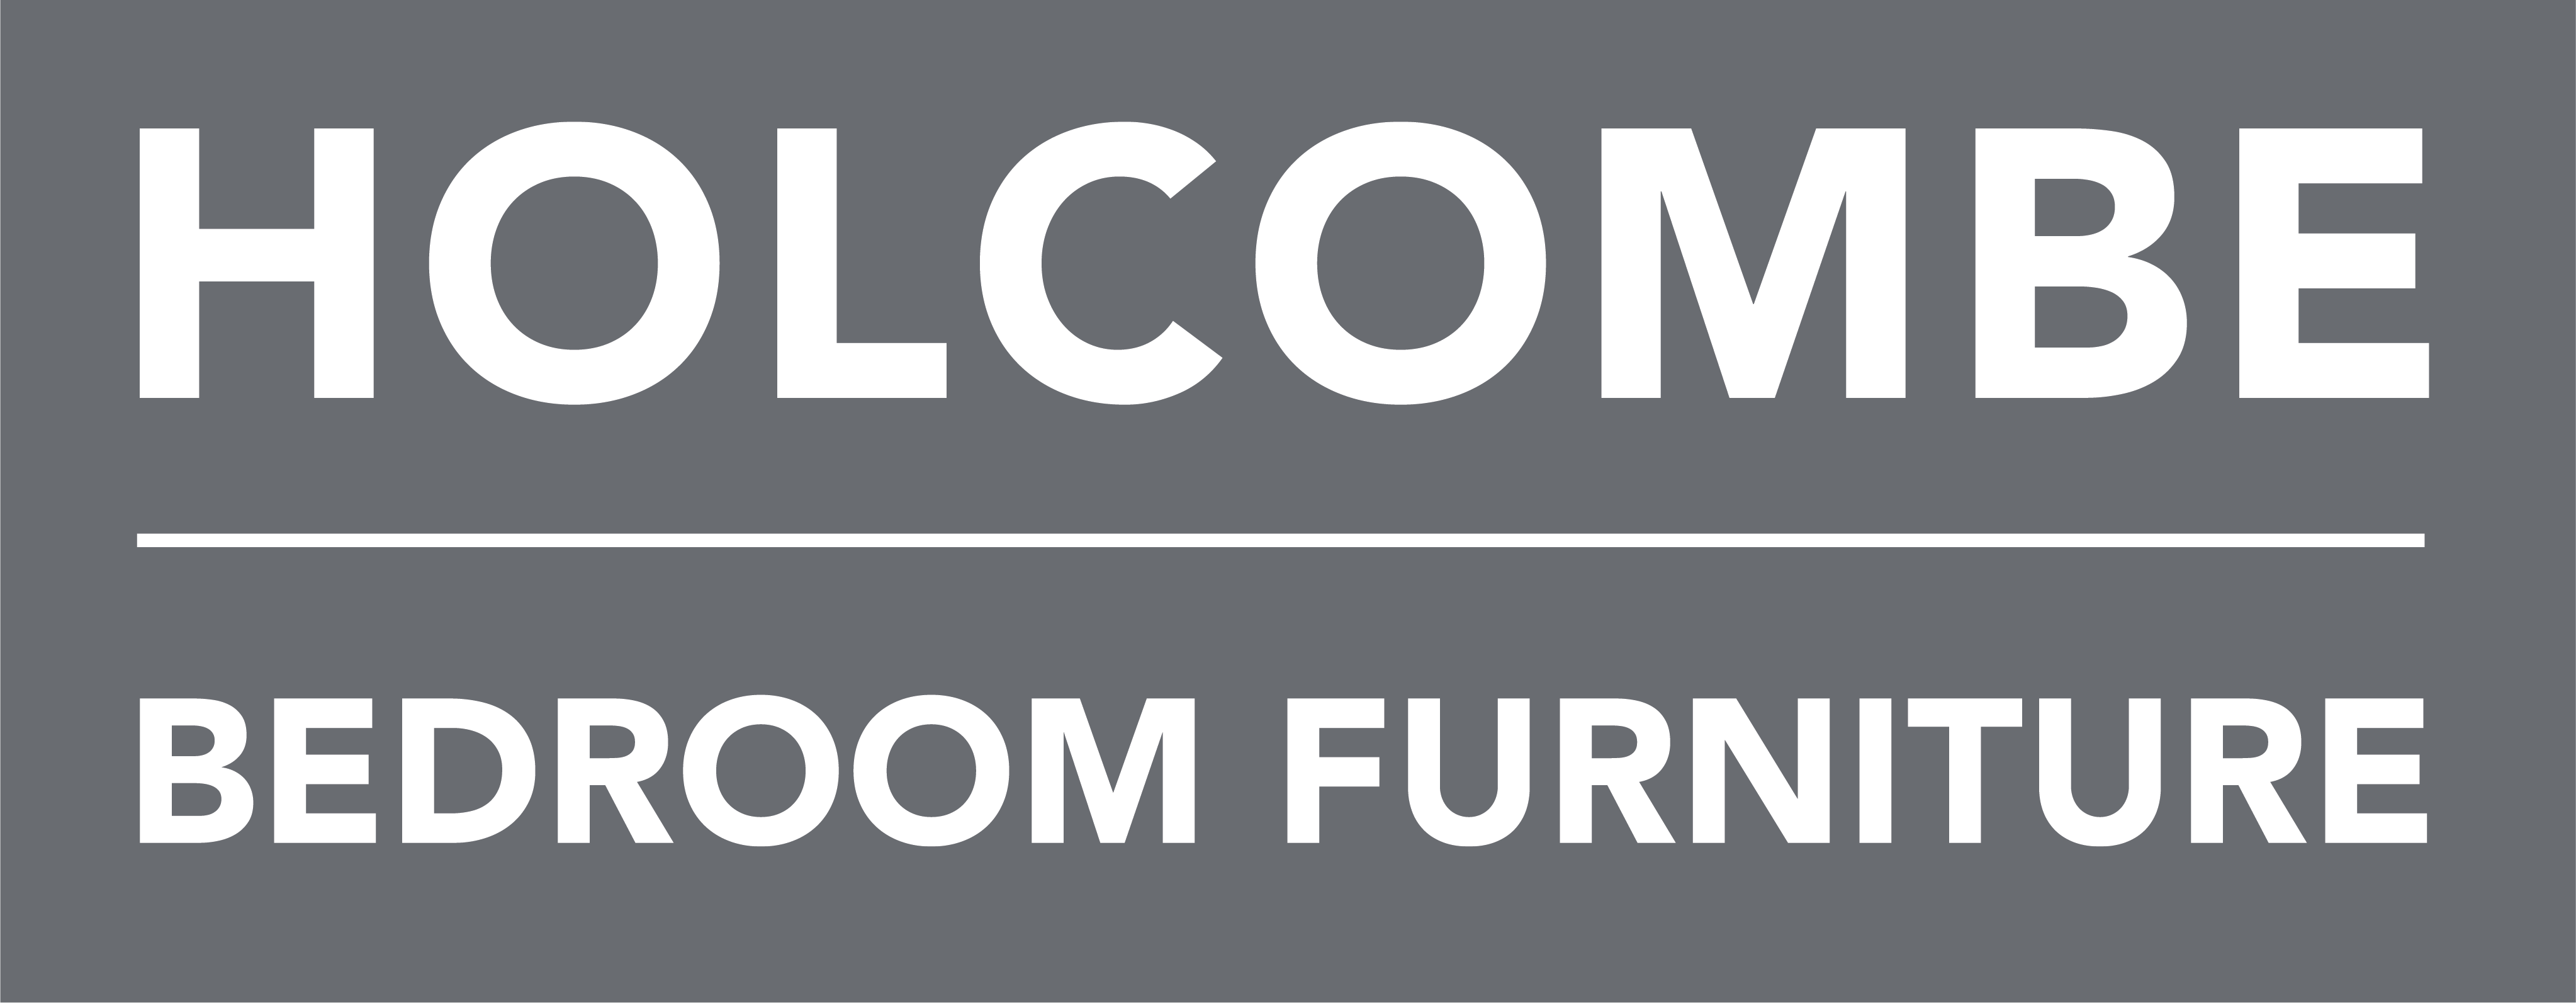 Holcombe Bedroom Furniture Logo